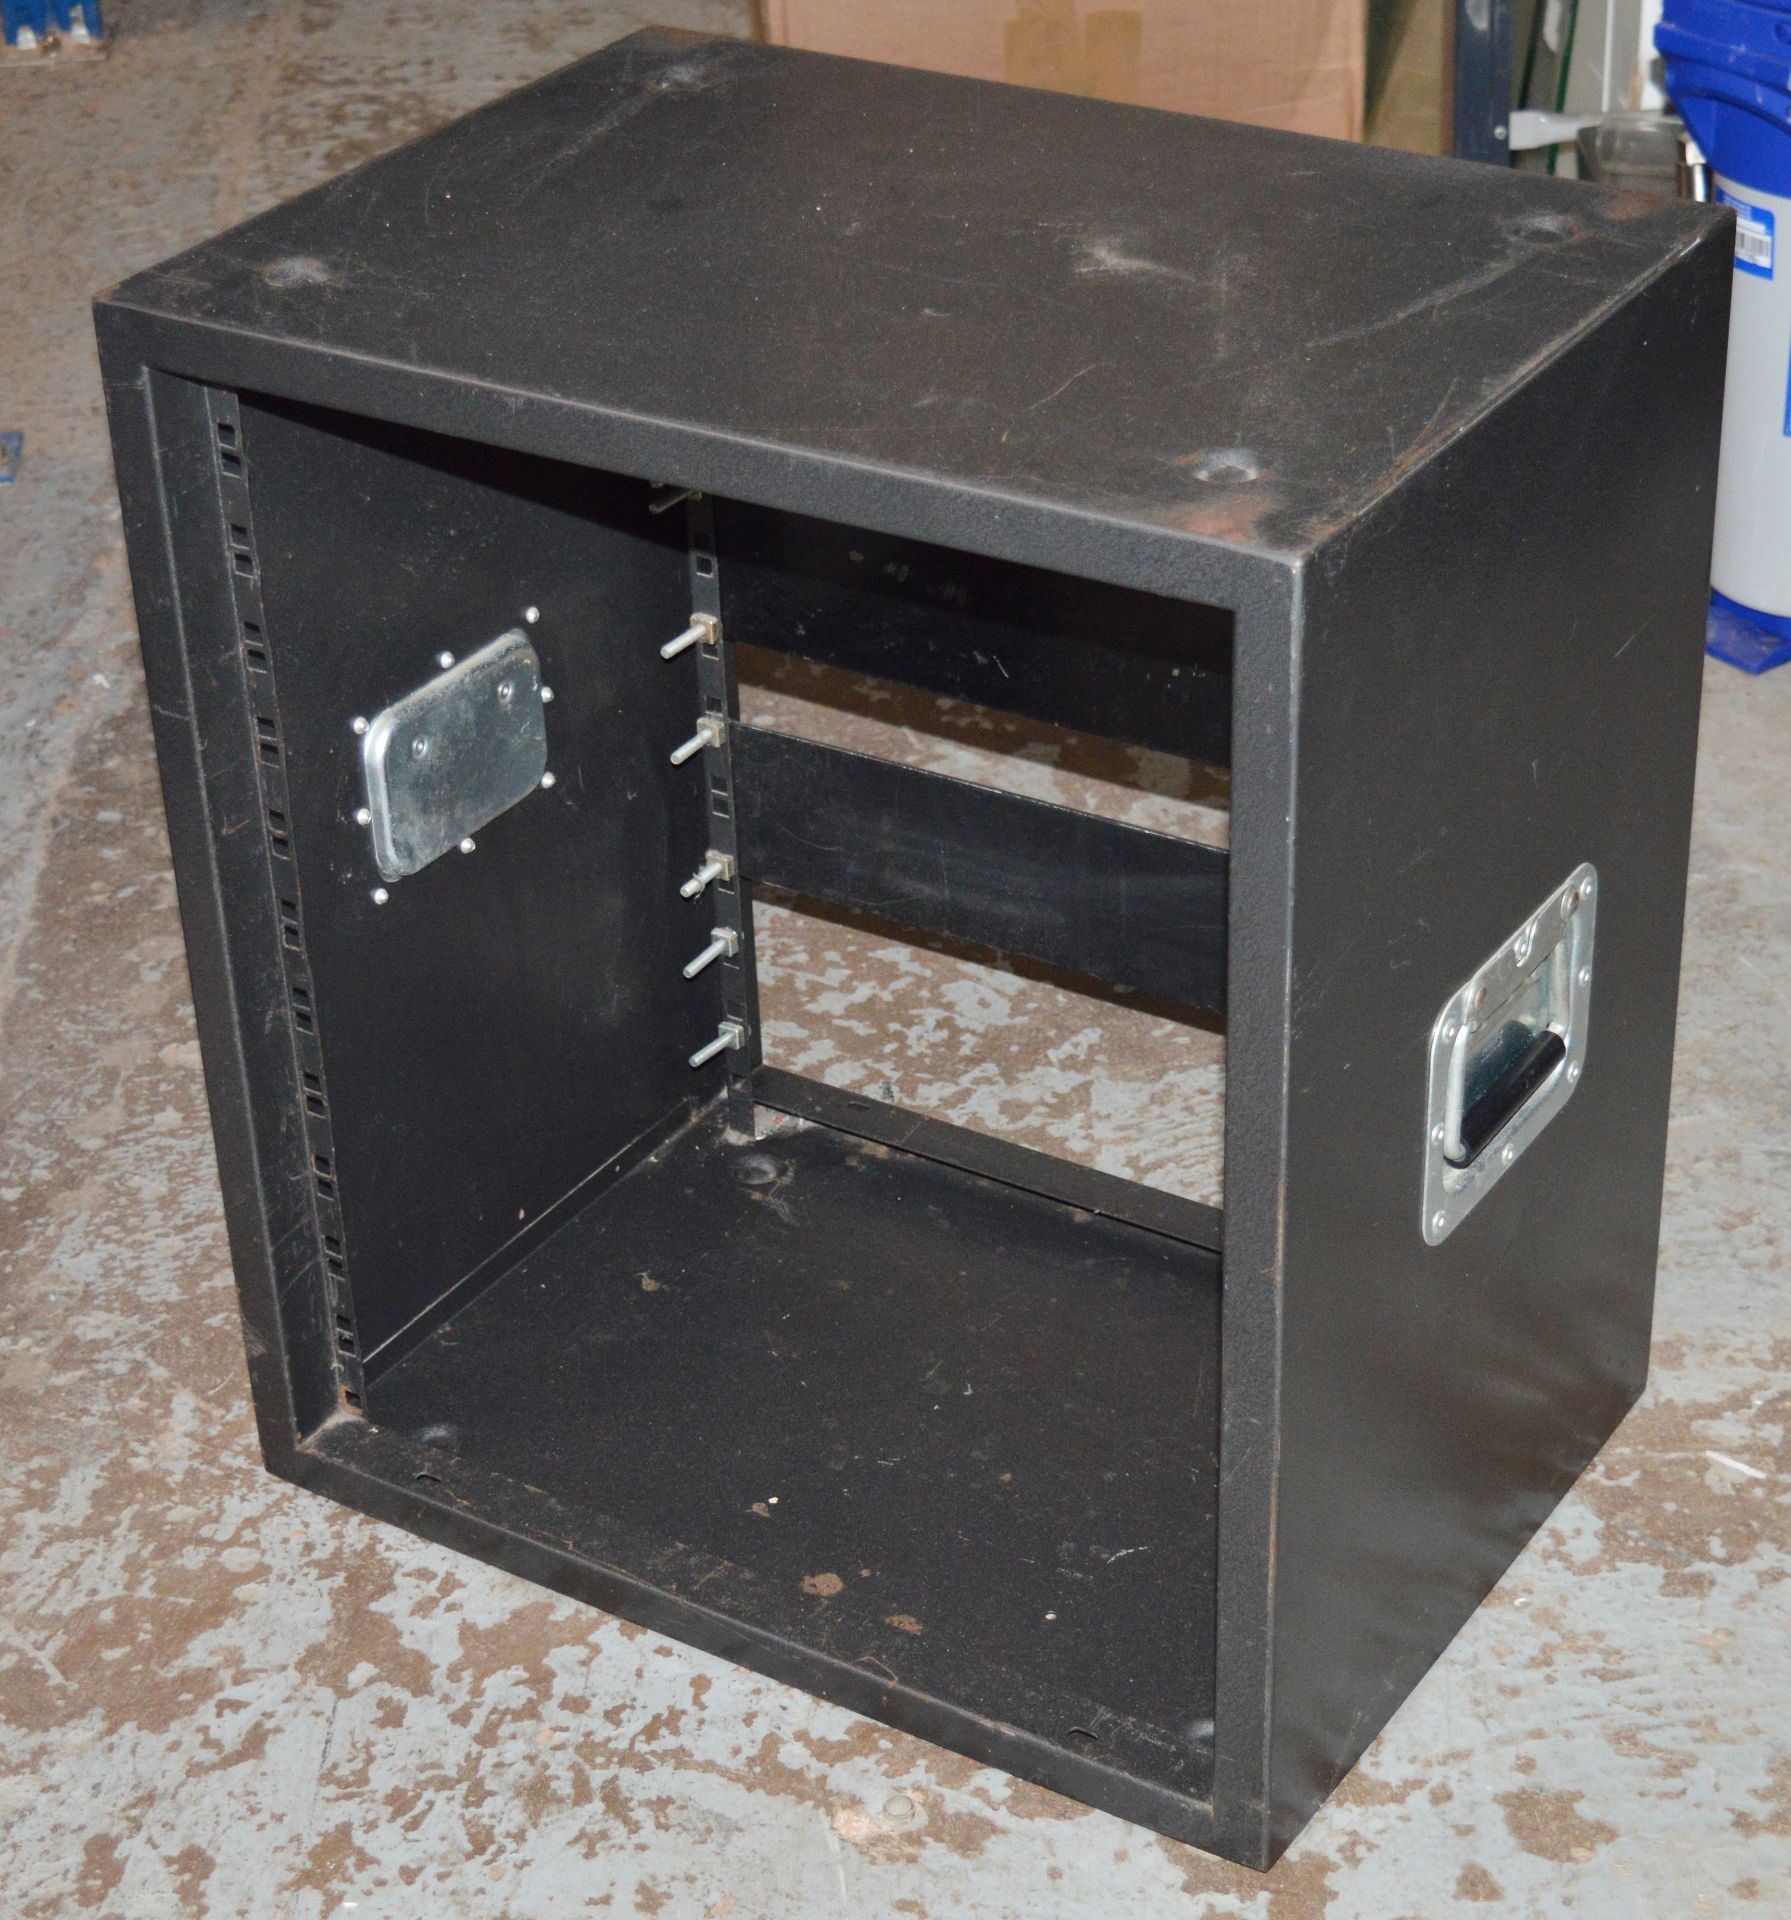 1 x Rack Mount Cabinet With Handles - H60 x W54 x D38 cms - CL290 - Location: Altrincham WA14